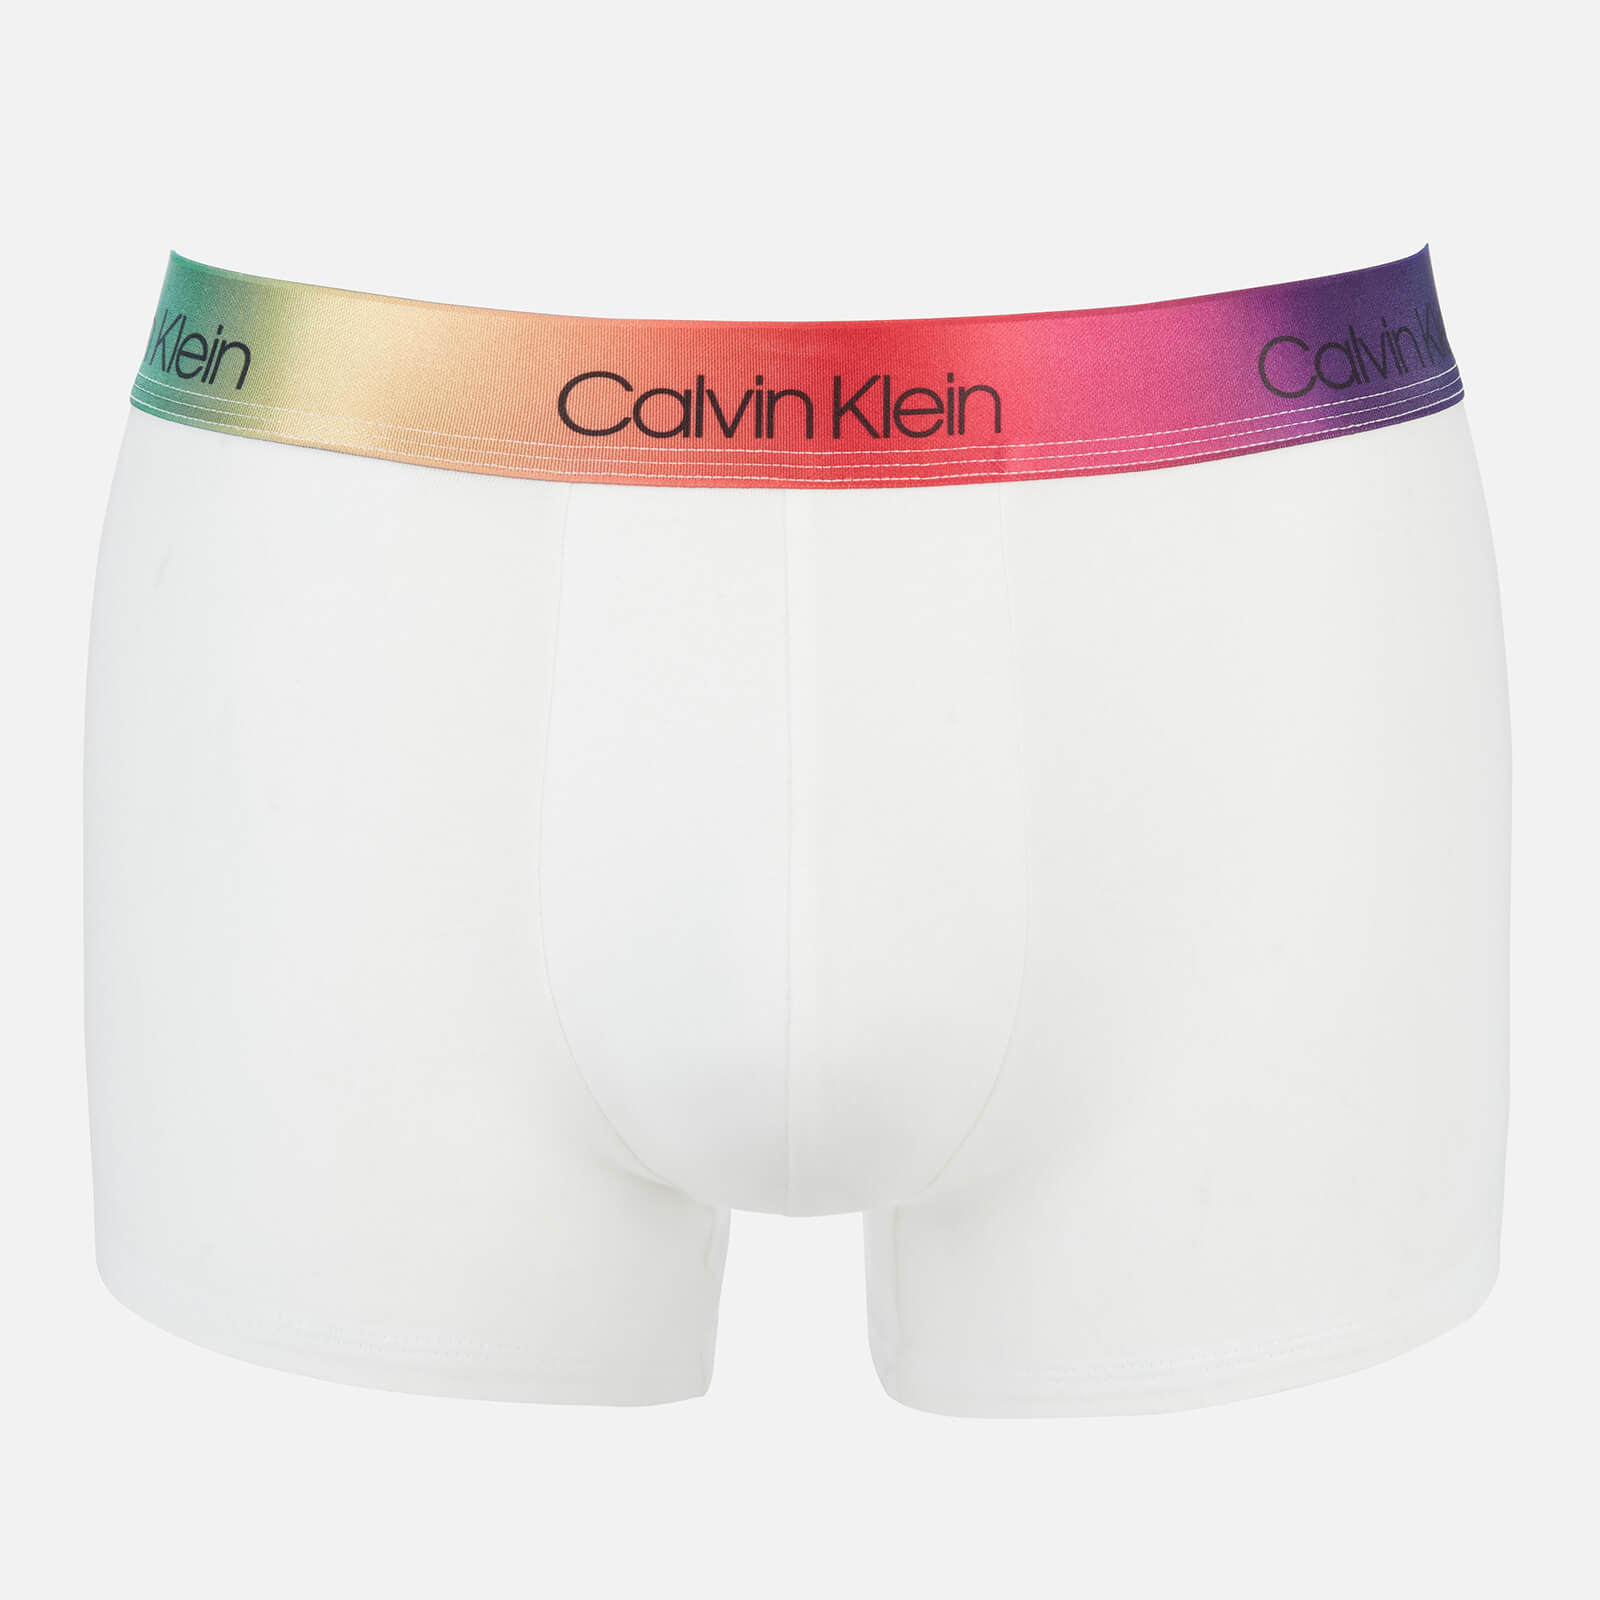 Calvin Klein Men's Rainbow Waistband Trunks - White - S